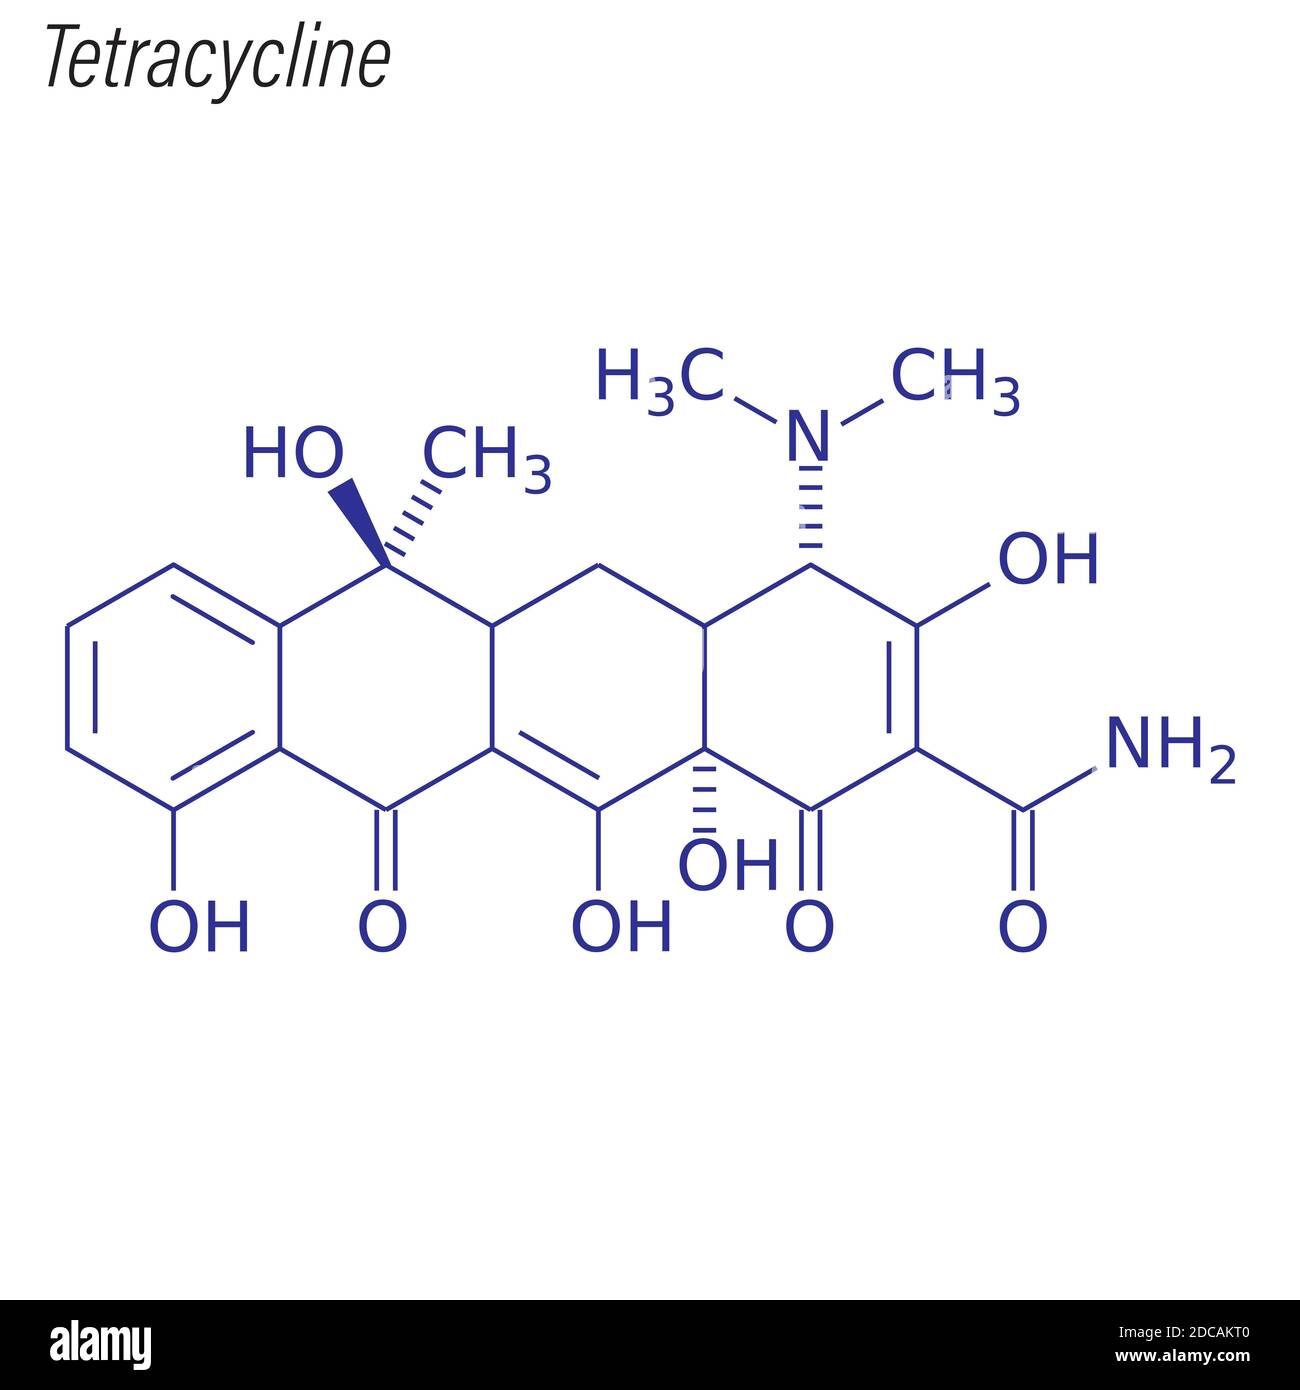 Tetracycline Mode of